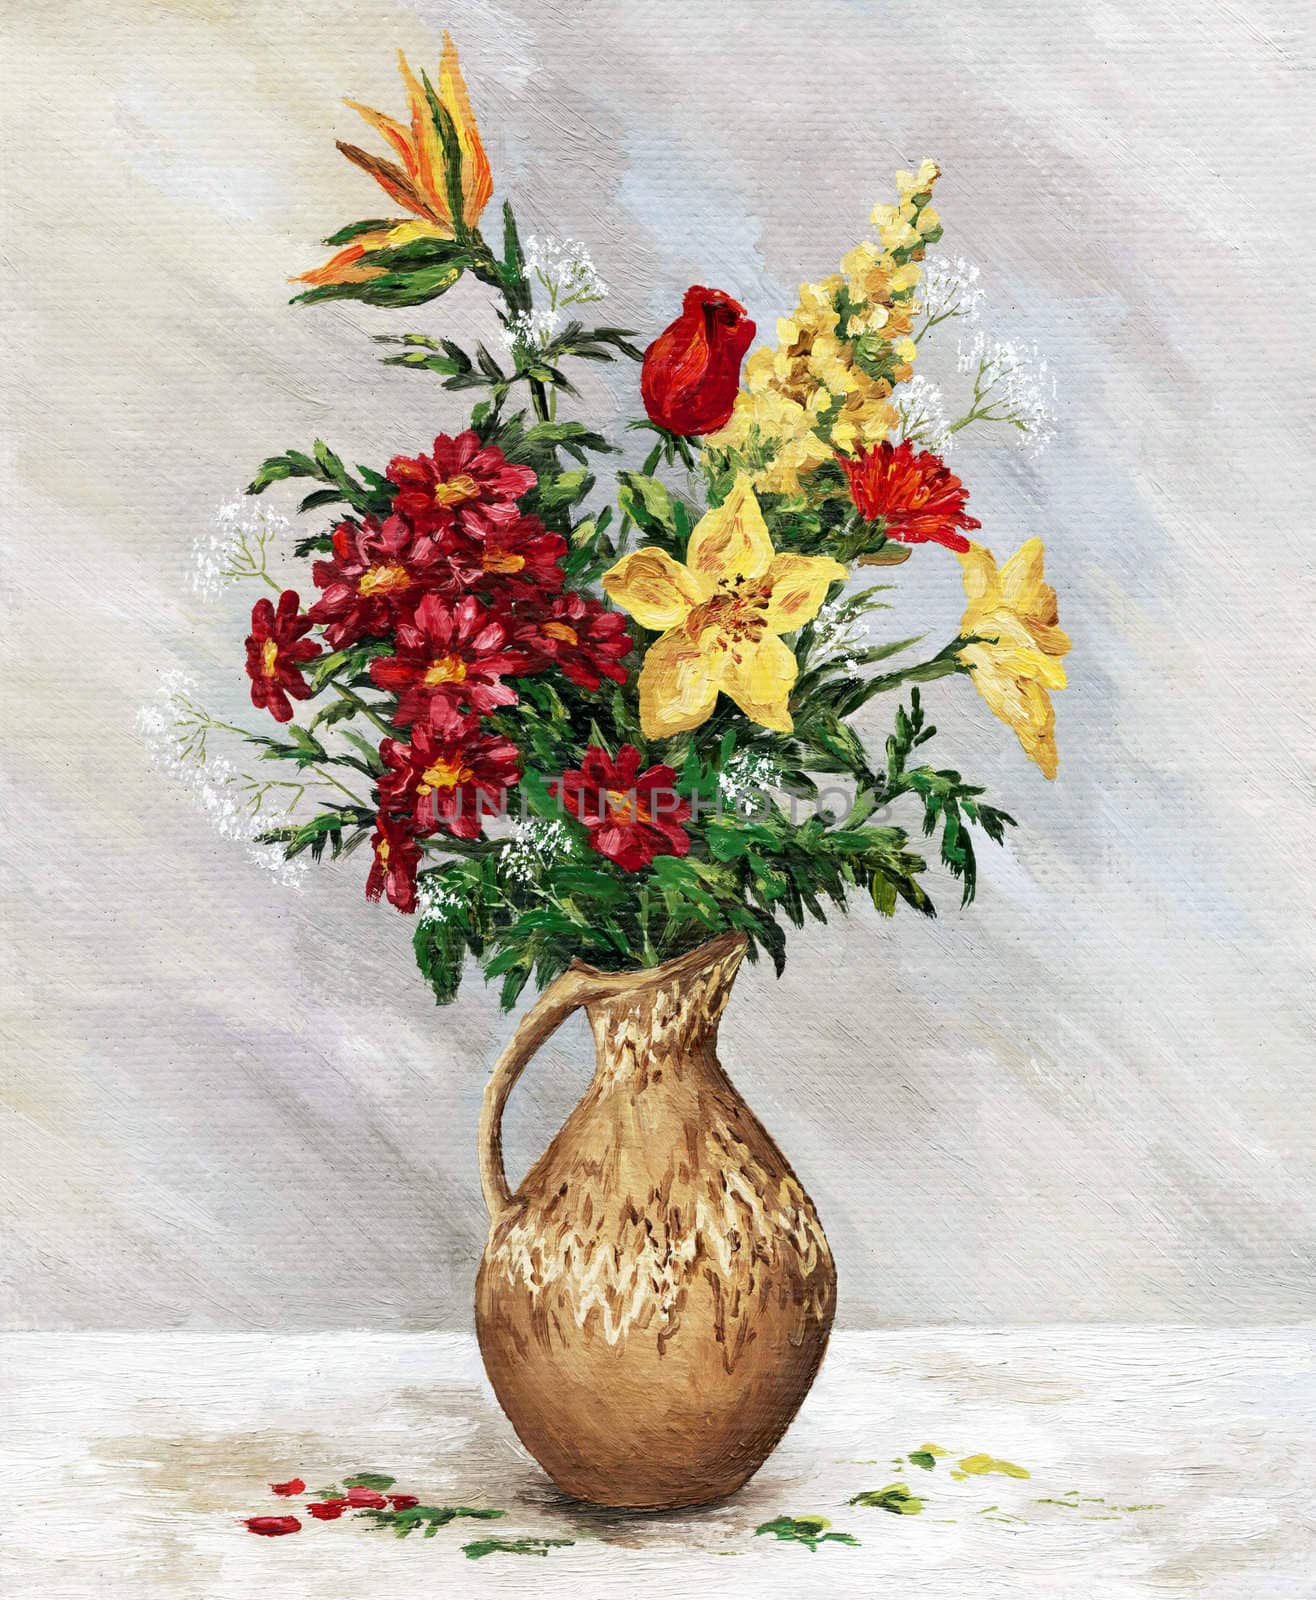 Bouquet in jug by alexcoolok